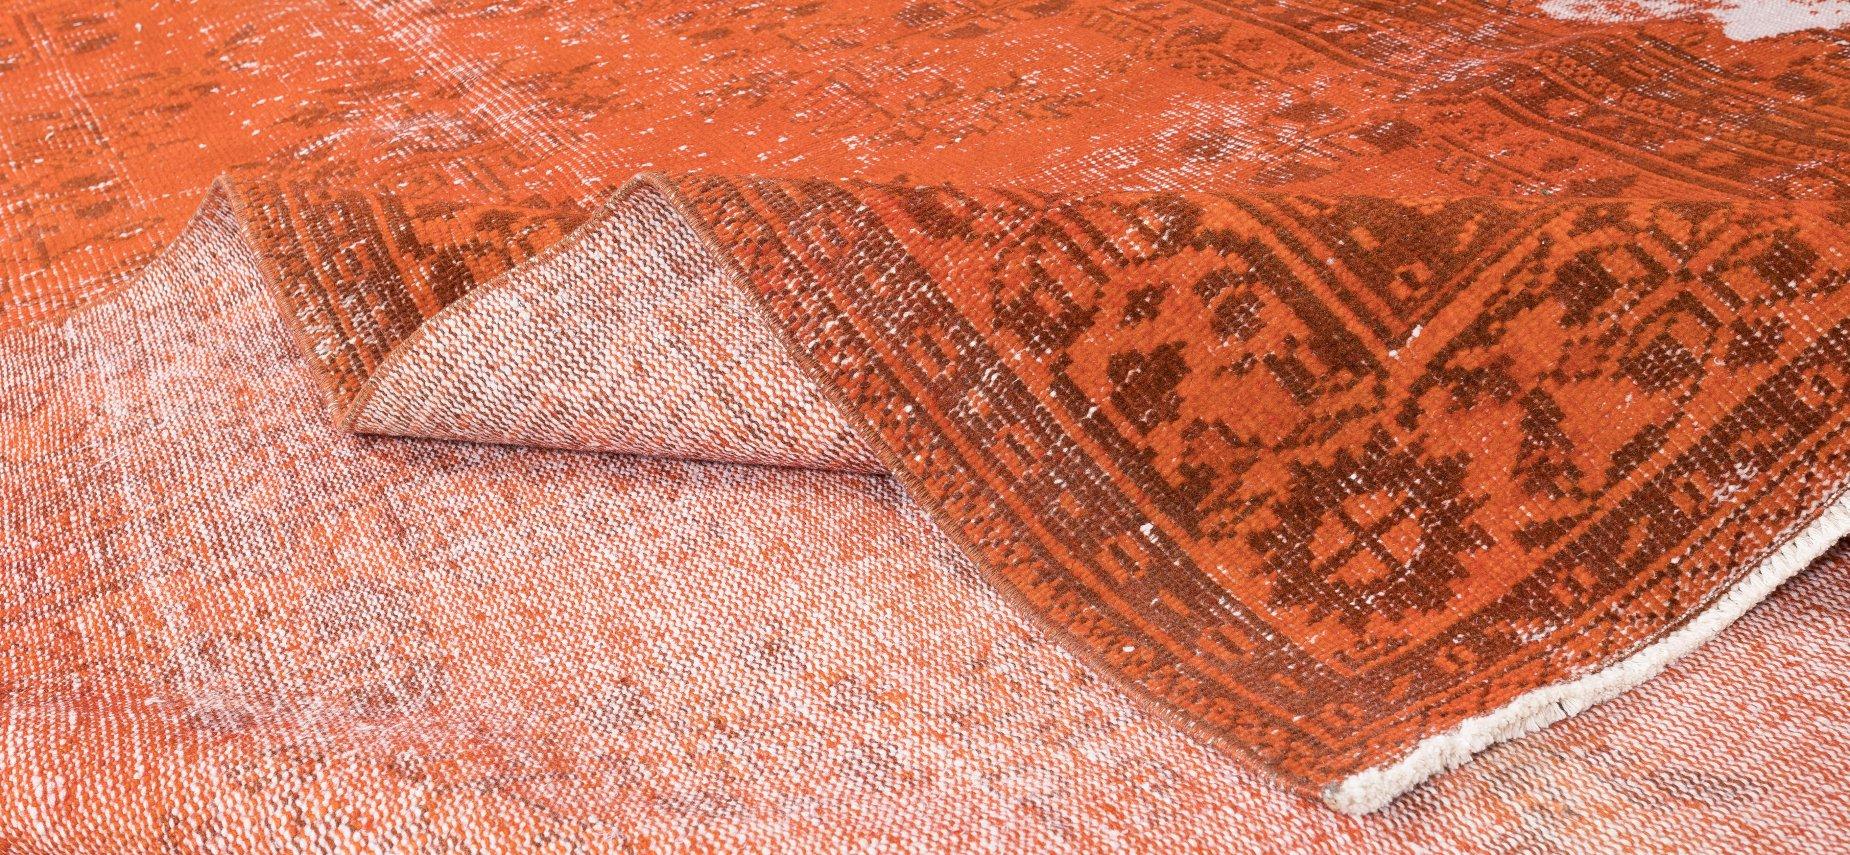 Hand-Woven 6.2x9.8 Ft Orange Vintage Handmade Turkish Wool Rug, Distressed Modern Carpet For Sale